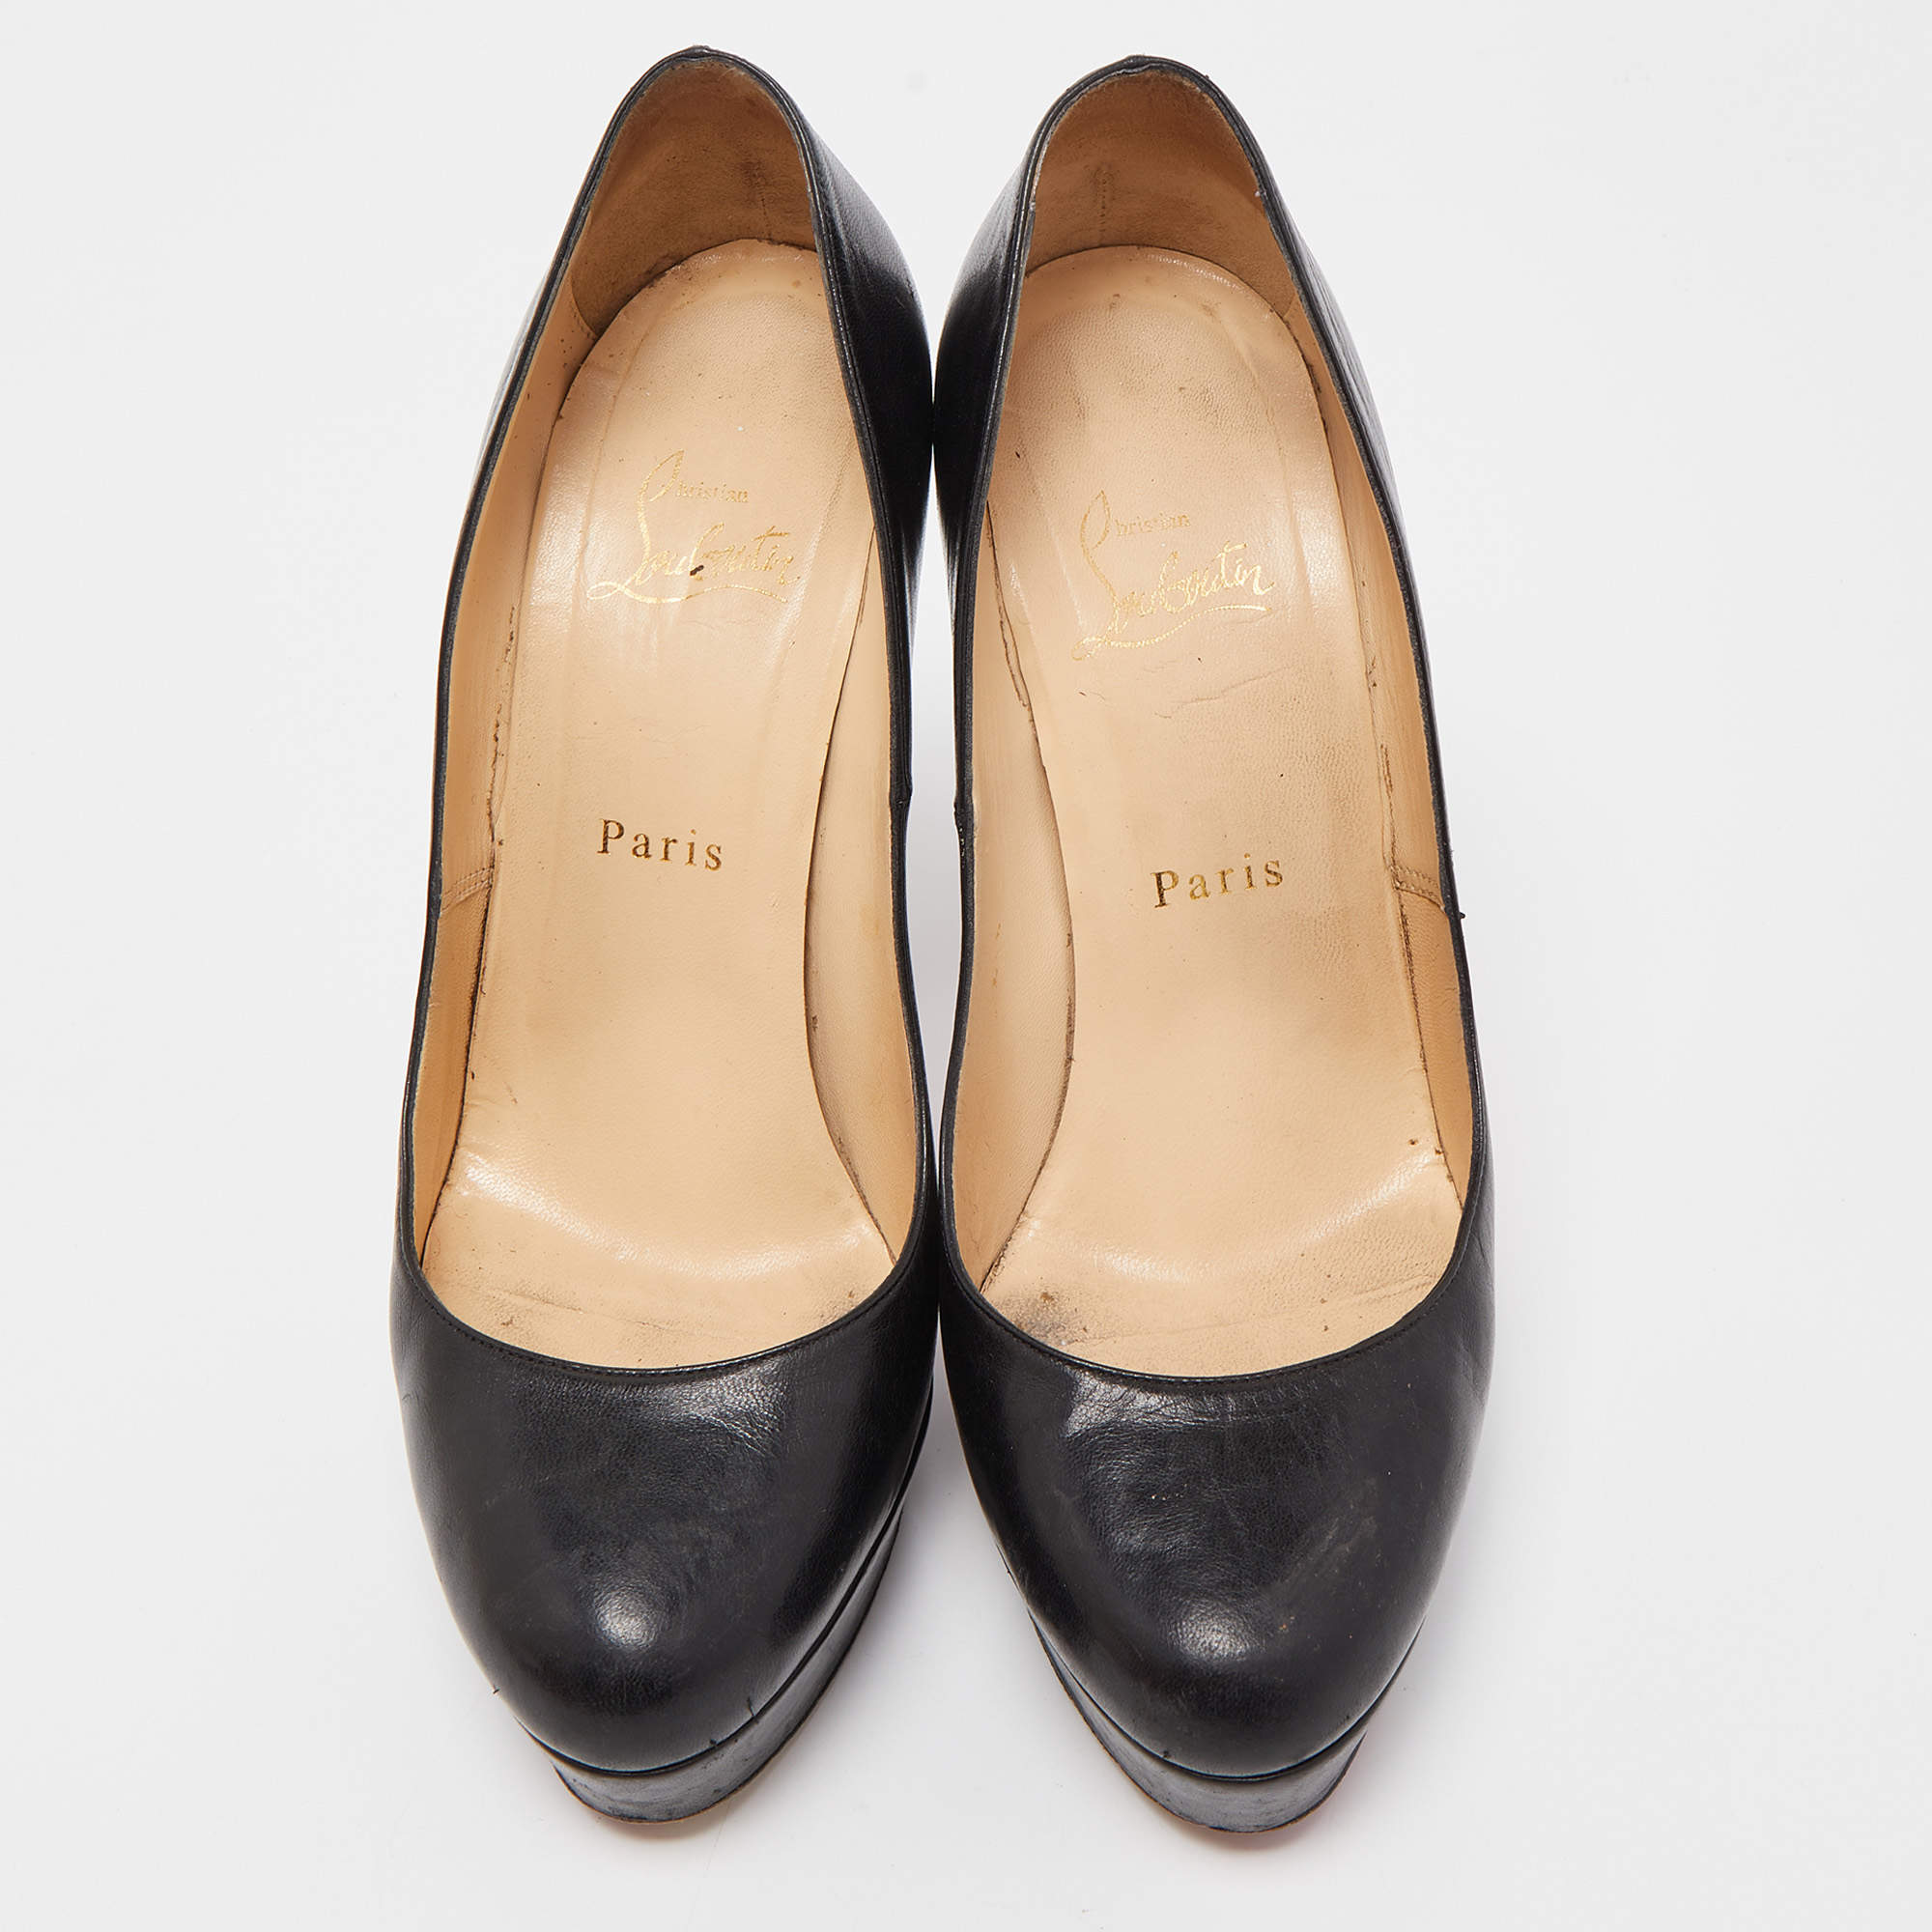 Bianca leather heels Christian Louboutin Black size 38 EU in Leather -  34534387